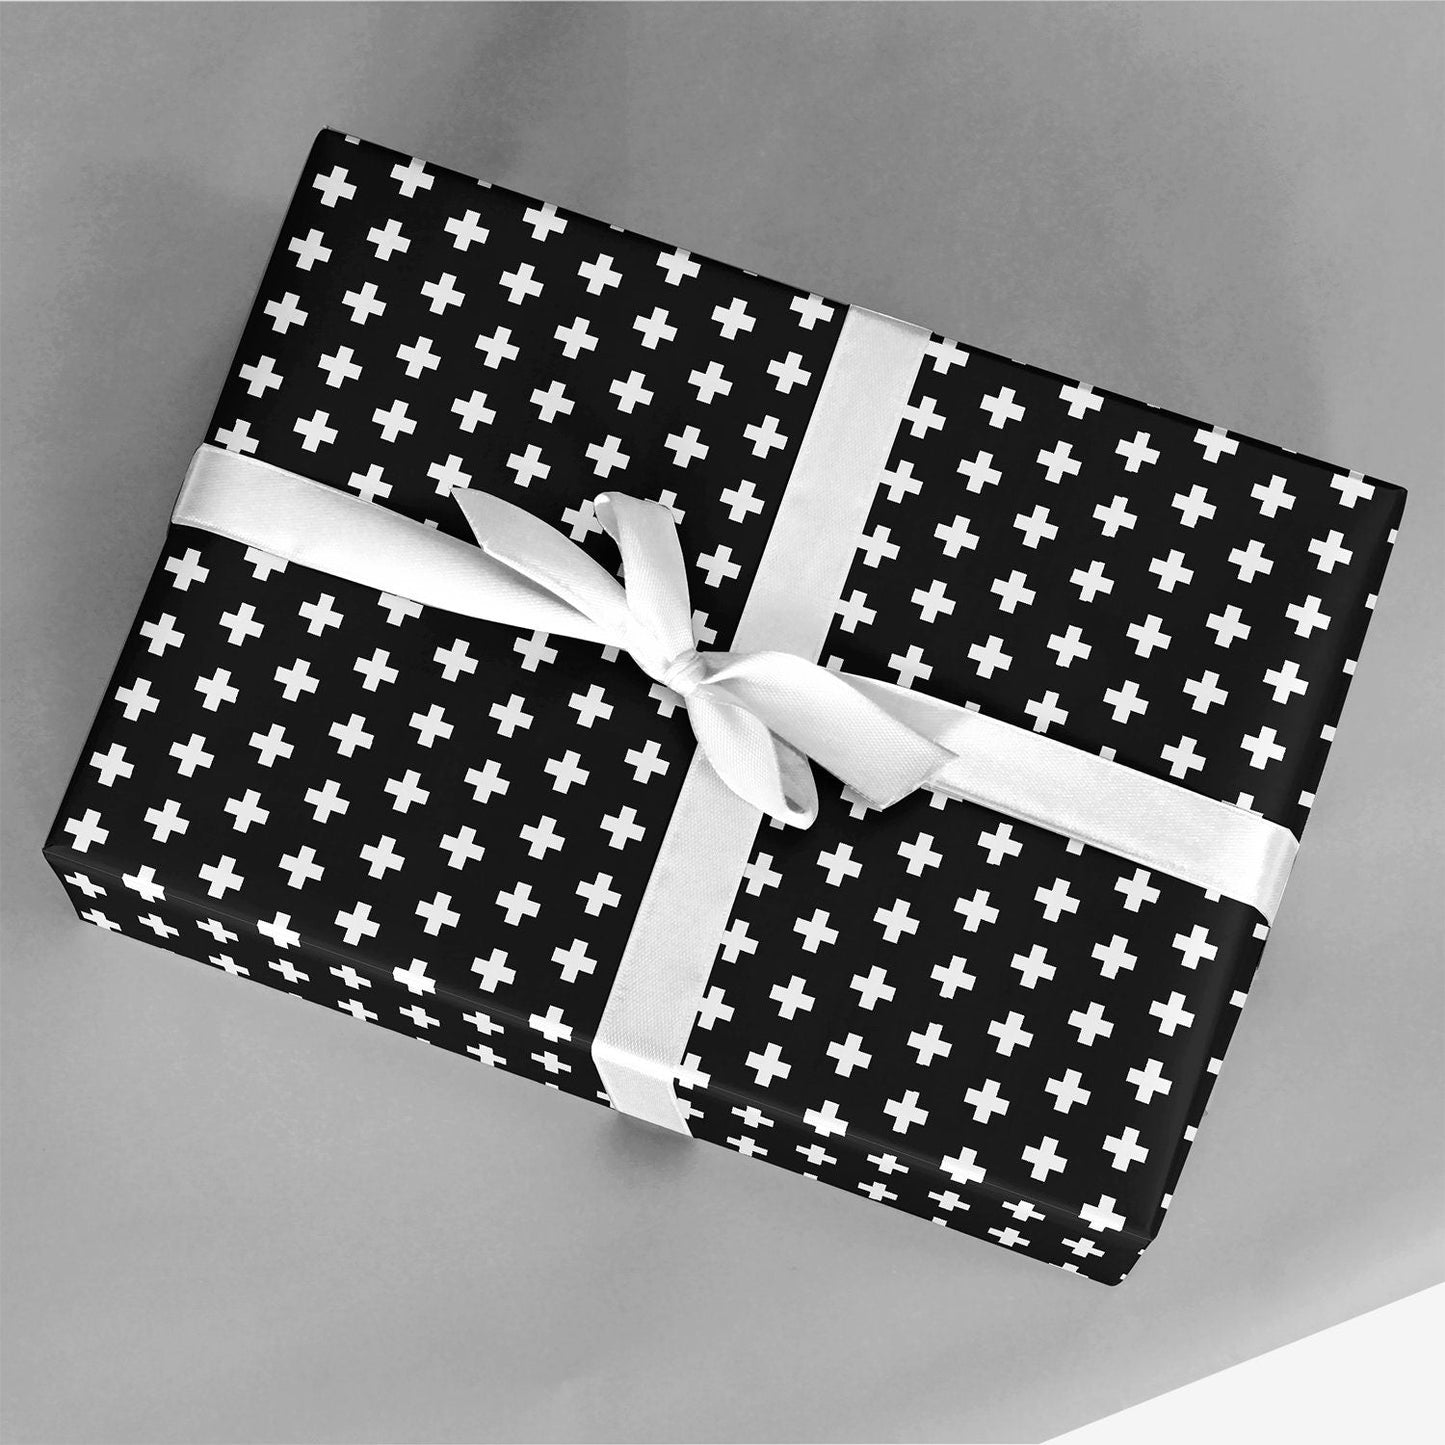 Minimal Gift Wrap The Design Craft